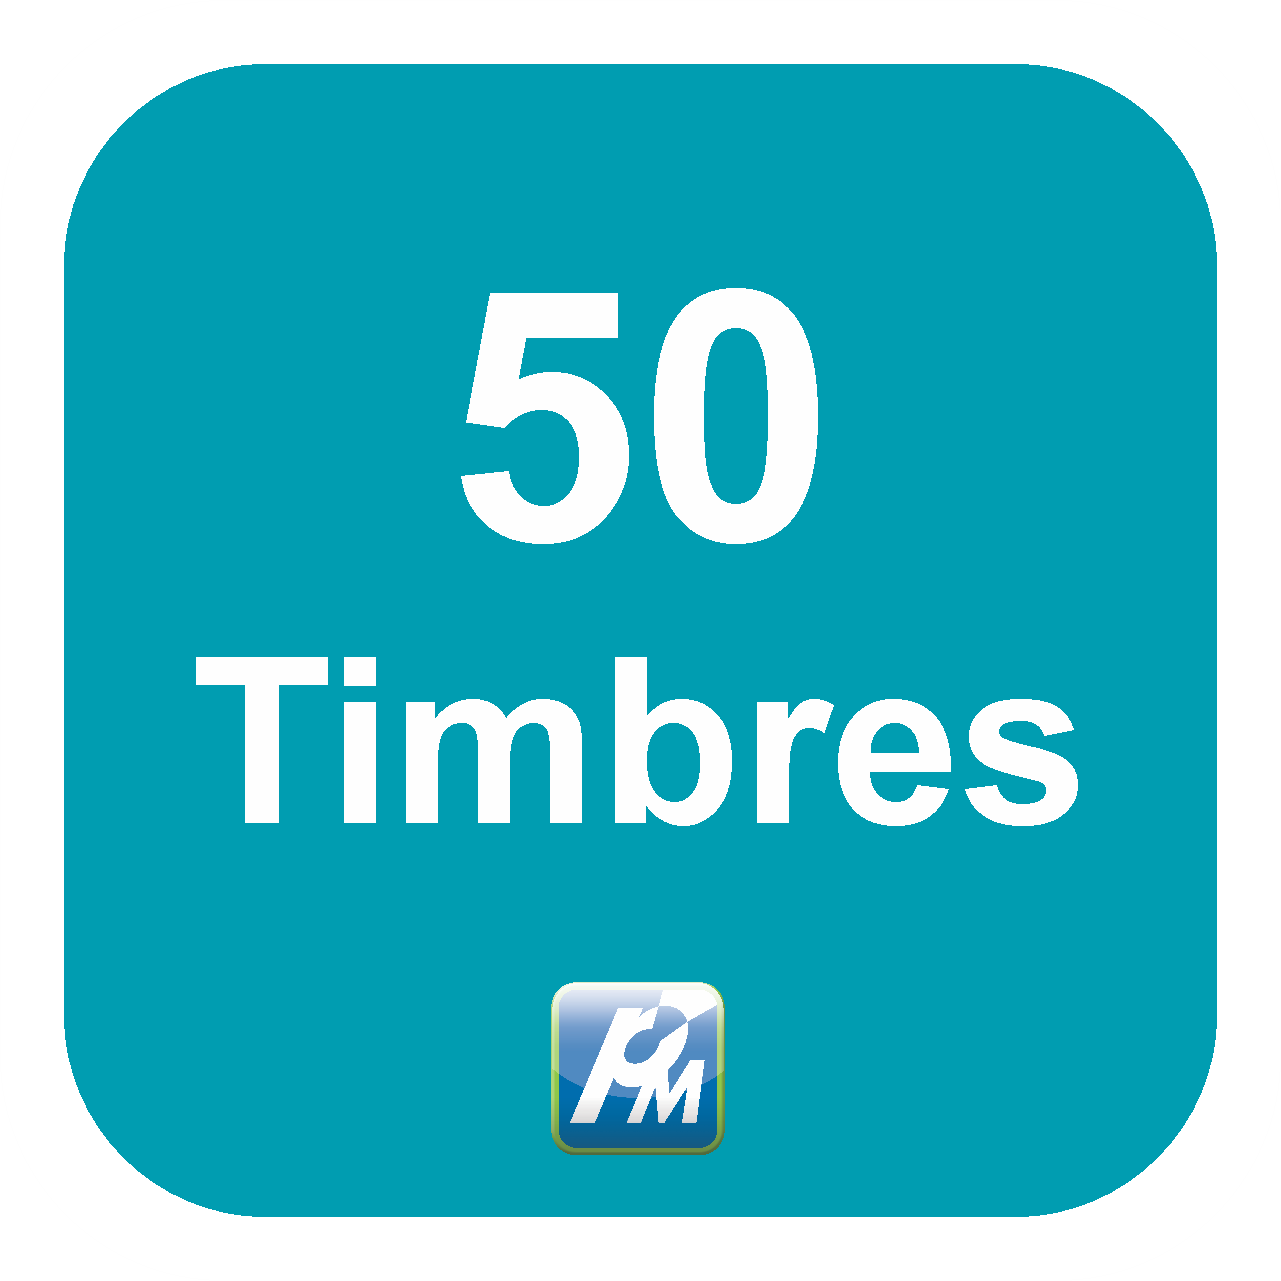 Aspel Timbres Fiscales - 50 Timbres - Aspel. Programas de México